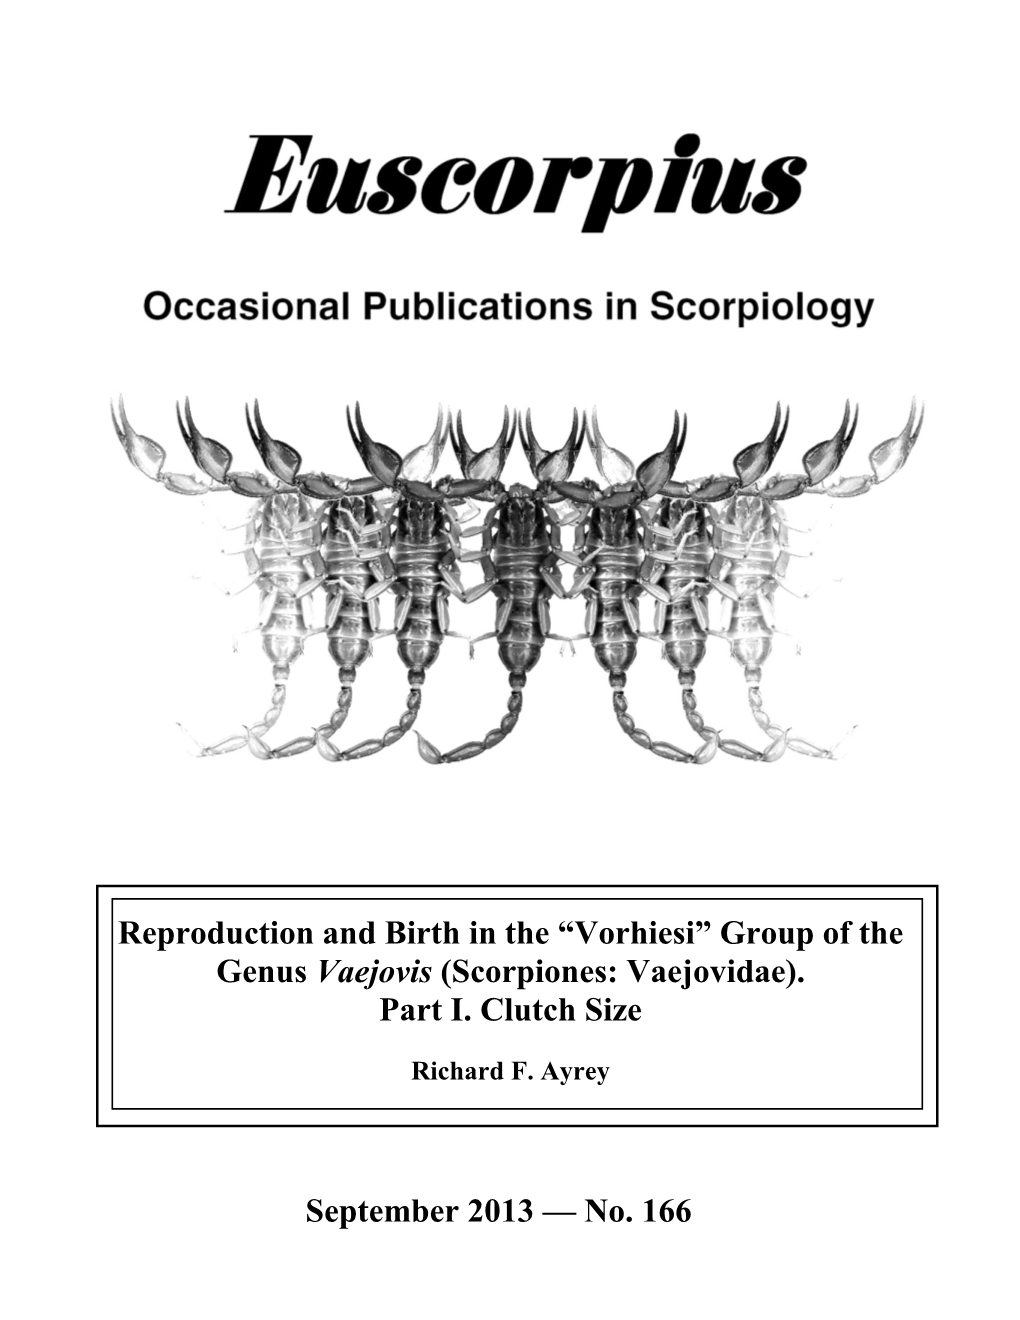 “Vorhiesi” Group of the Genus Vaejovis (Scorpiones: Vaejovidae)